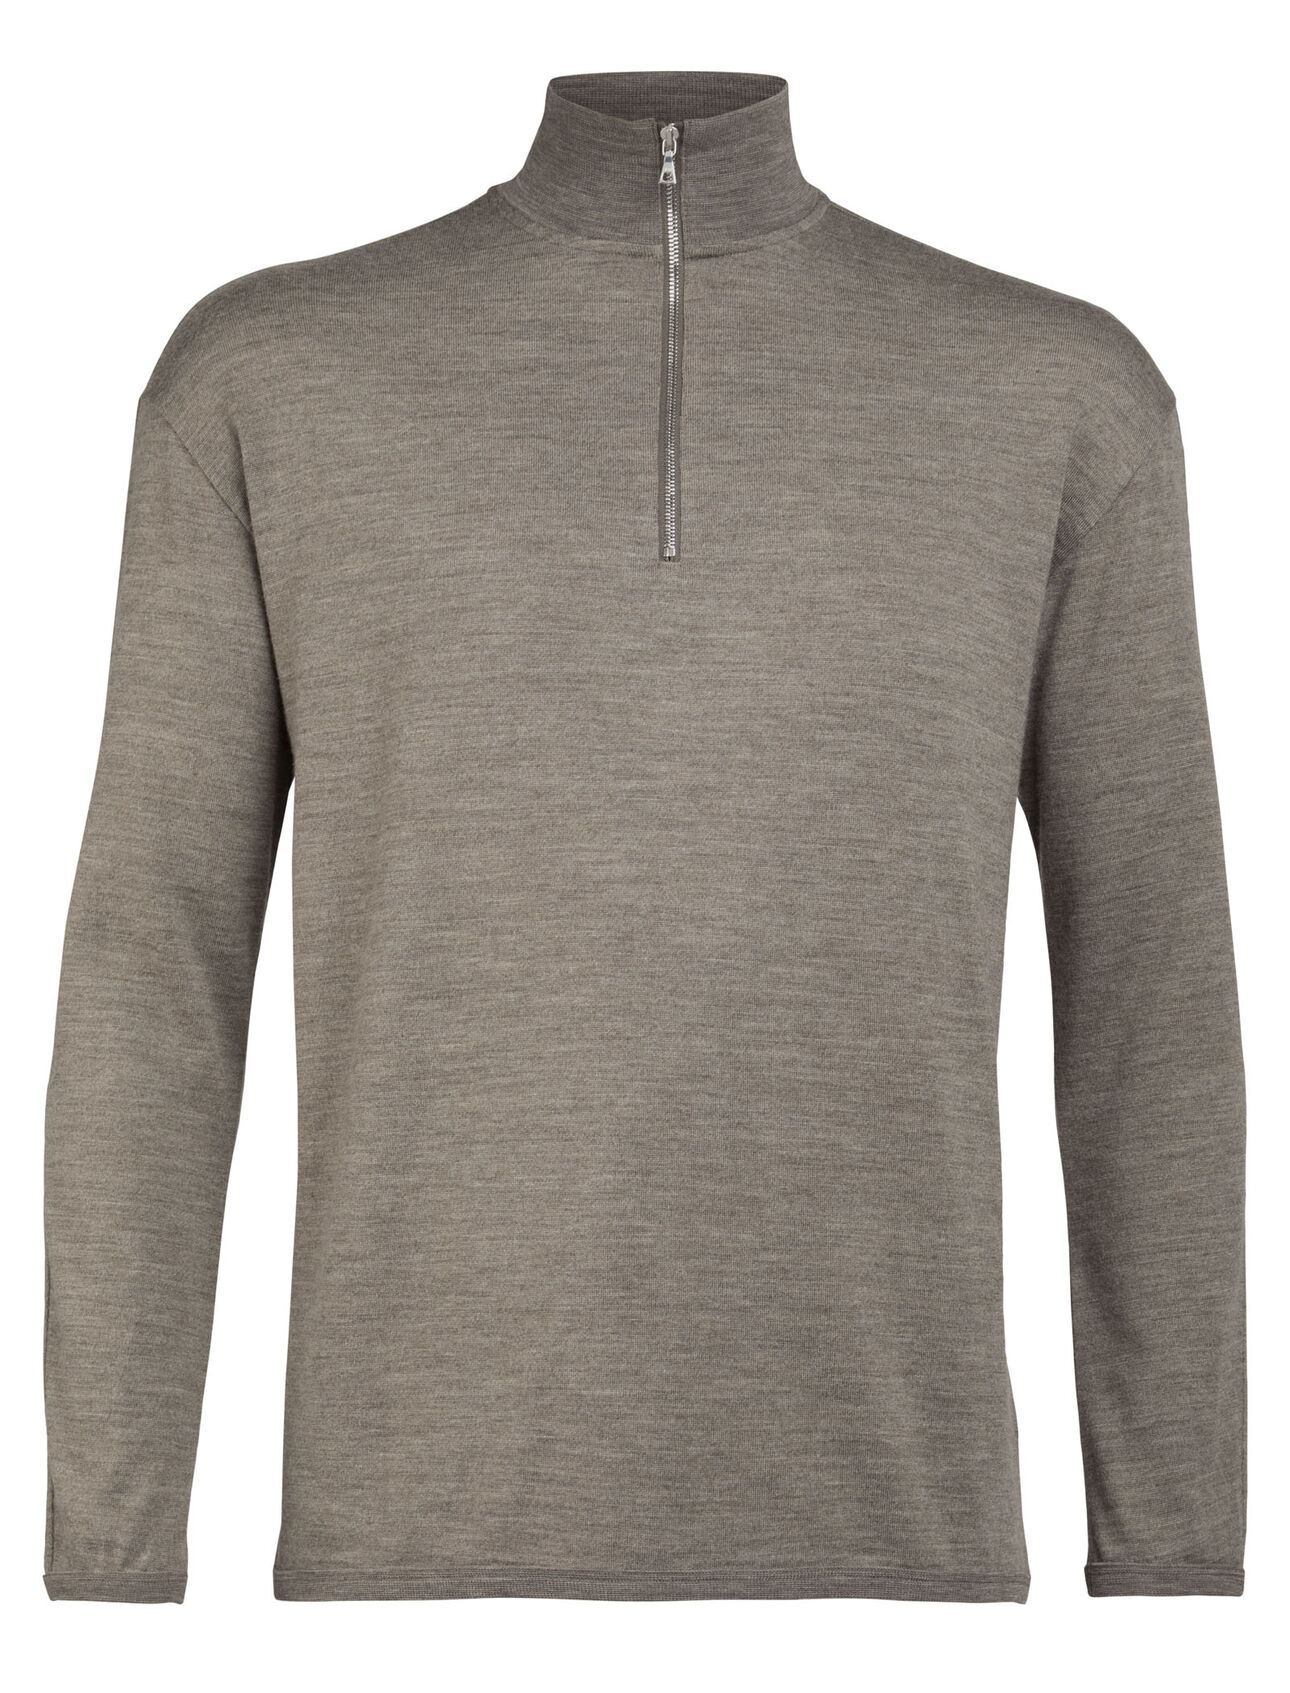 Mens Merino Deice Long Sleeve Half Zip Top A classic midweight sweatshirt made with 100% merino wool jersey, the Deice Long Sleeve Half Zip has essential style and comfort.